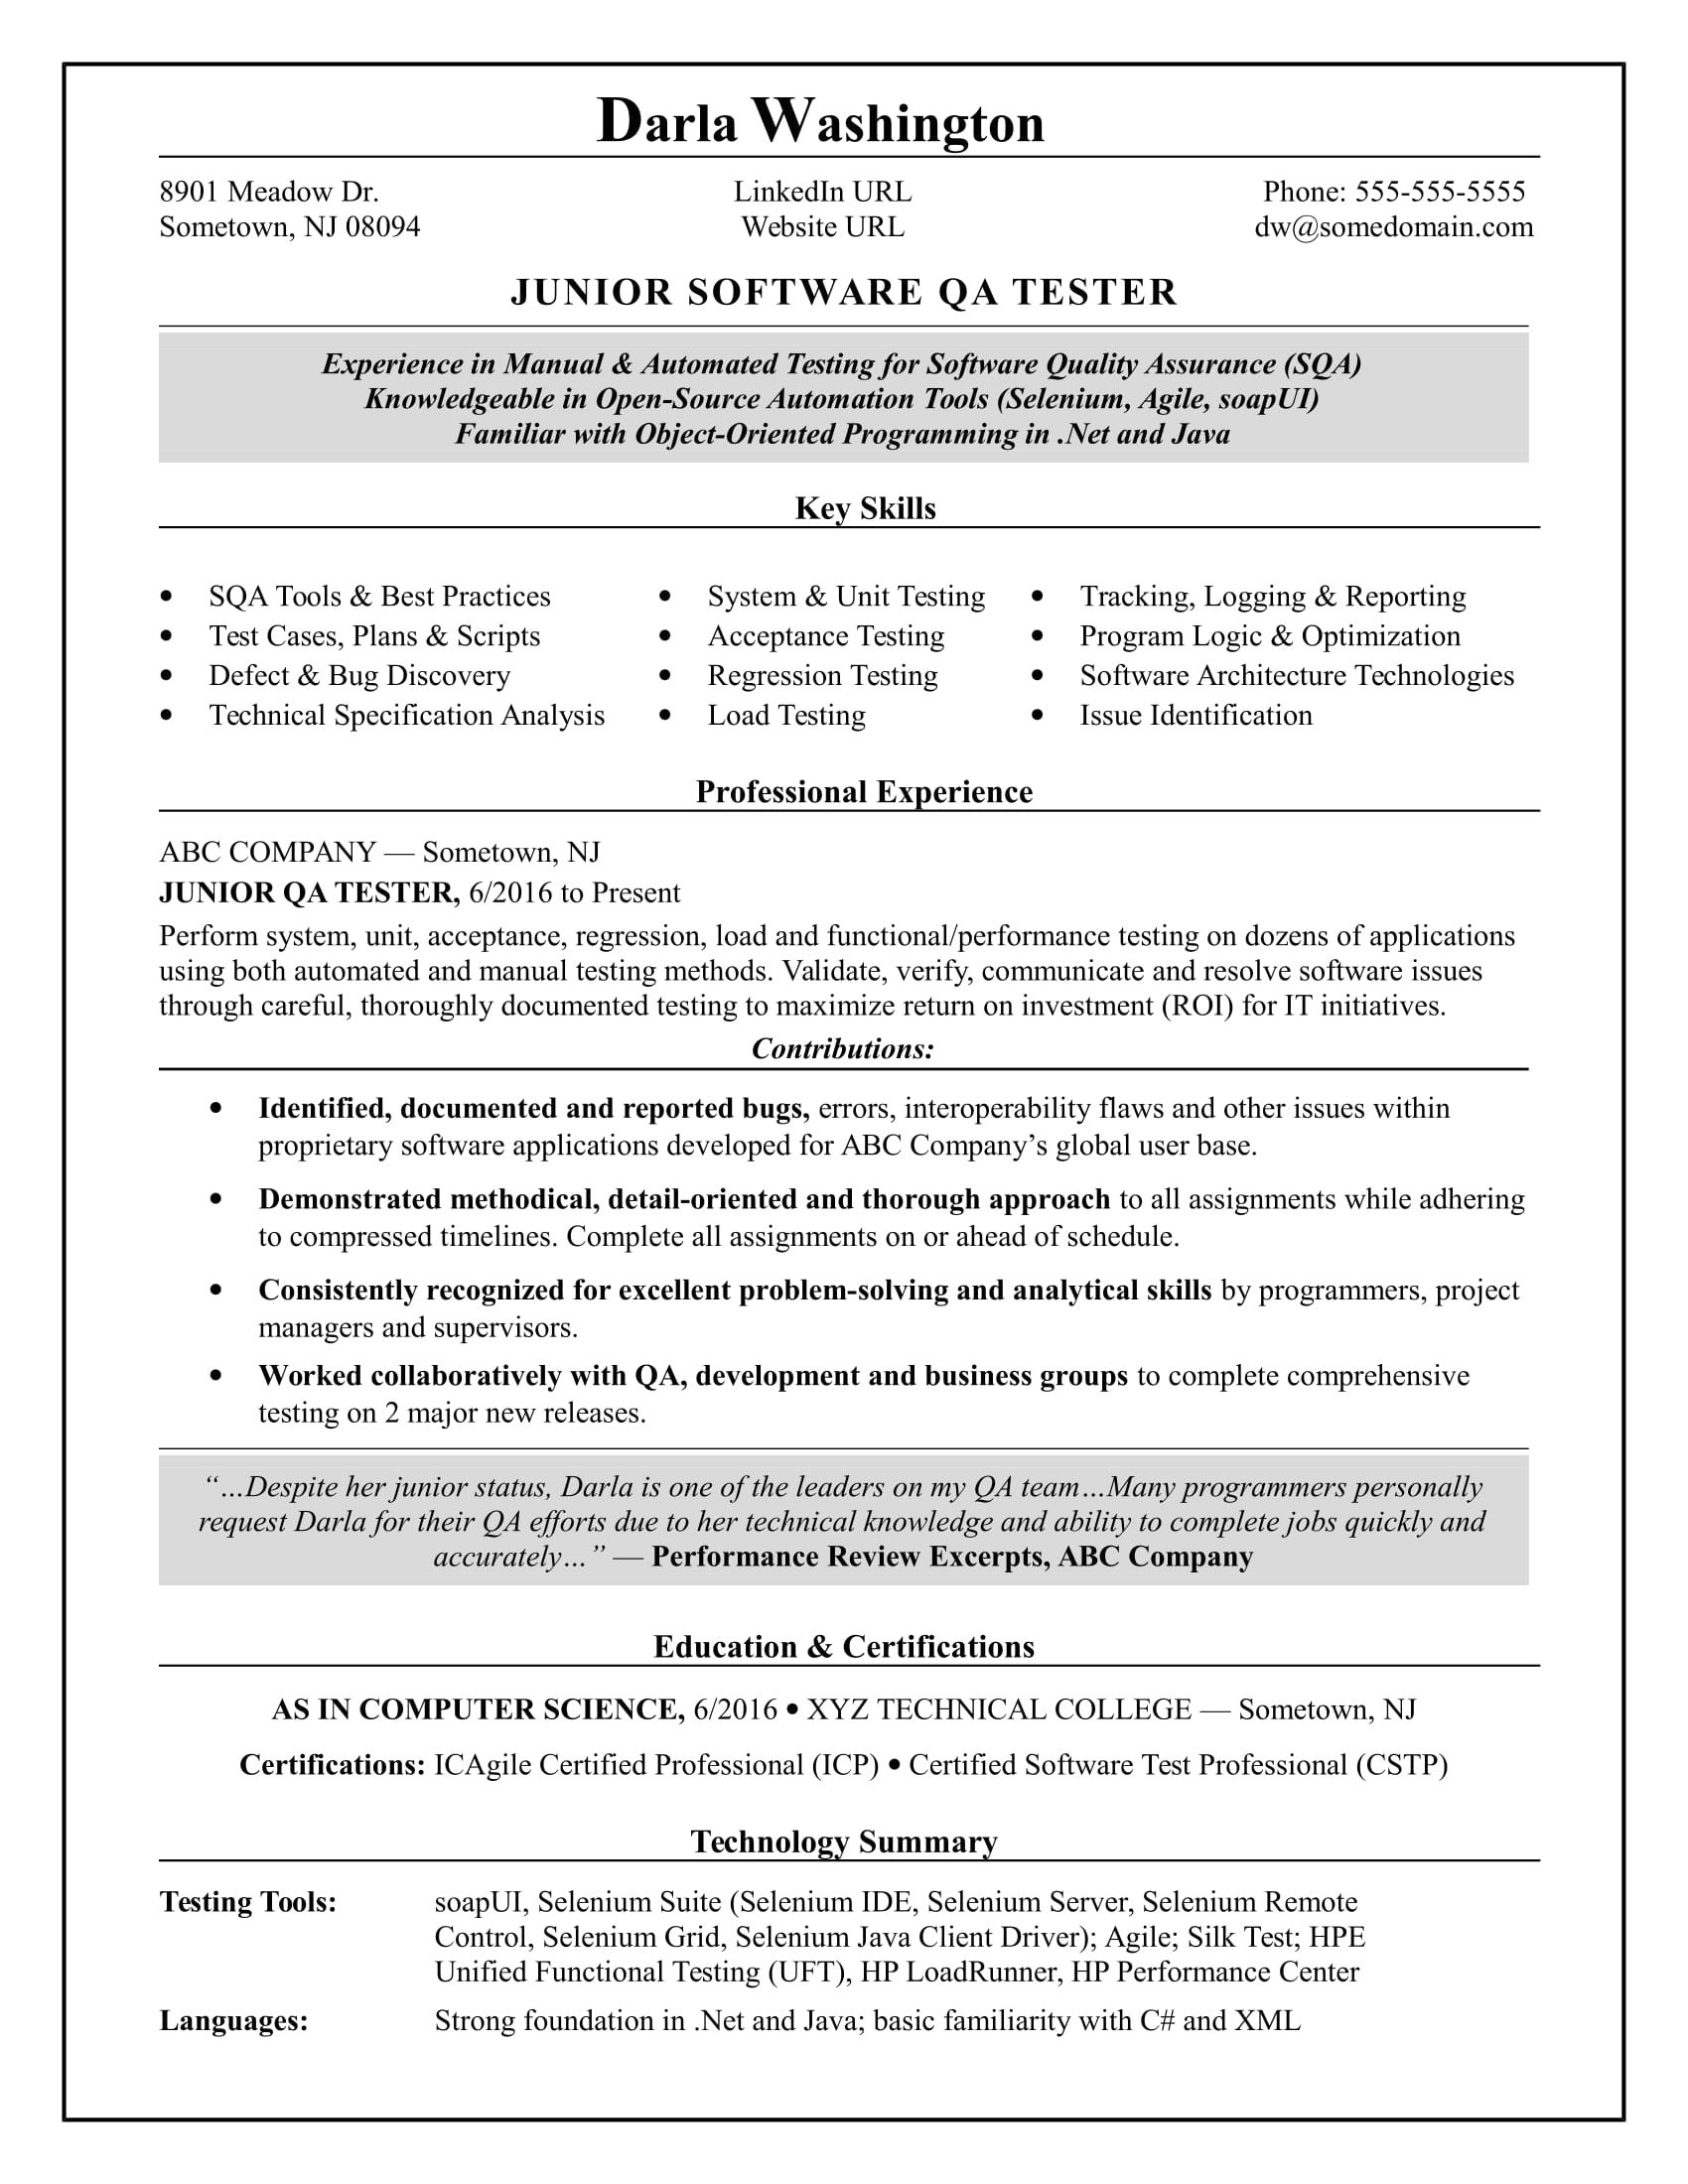 resume format for software tester fresher